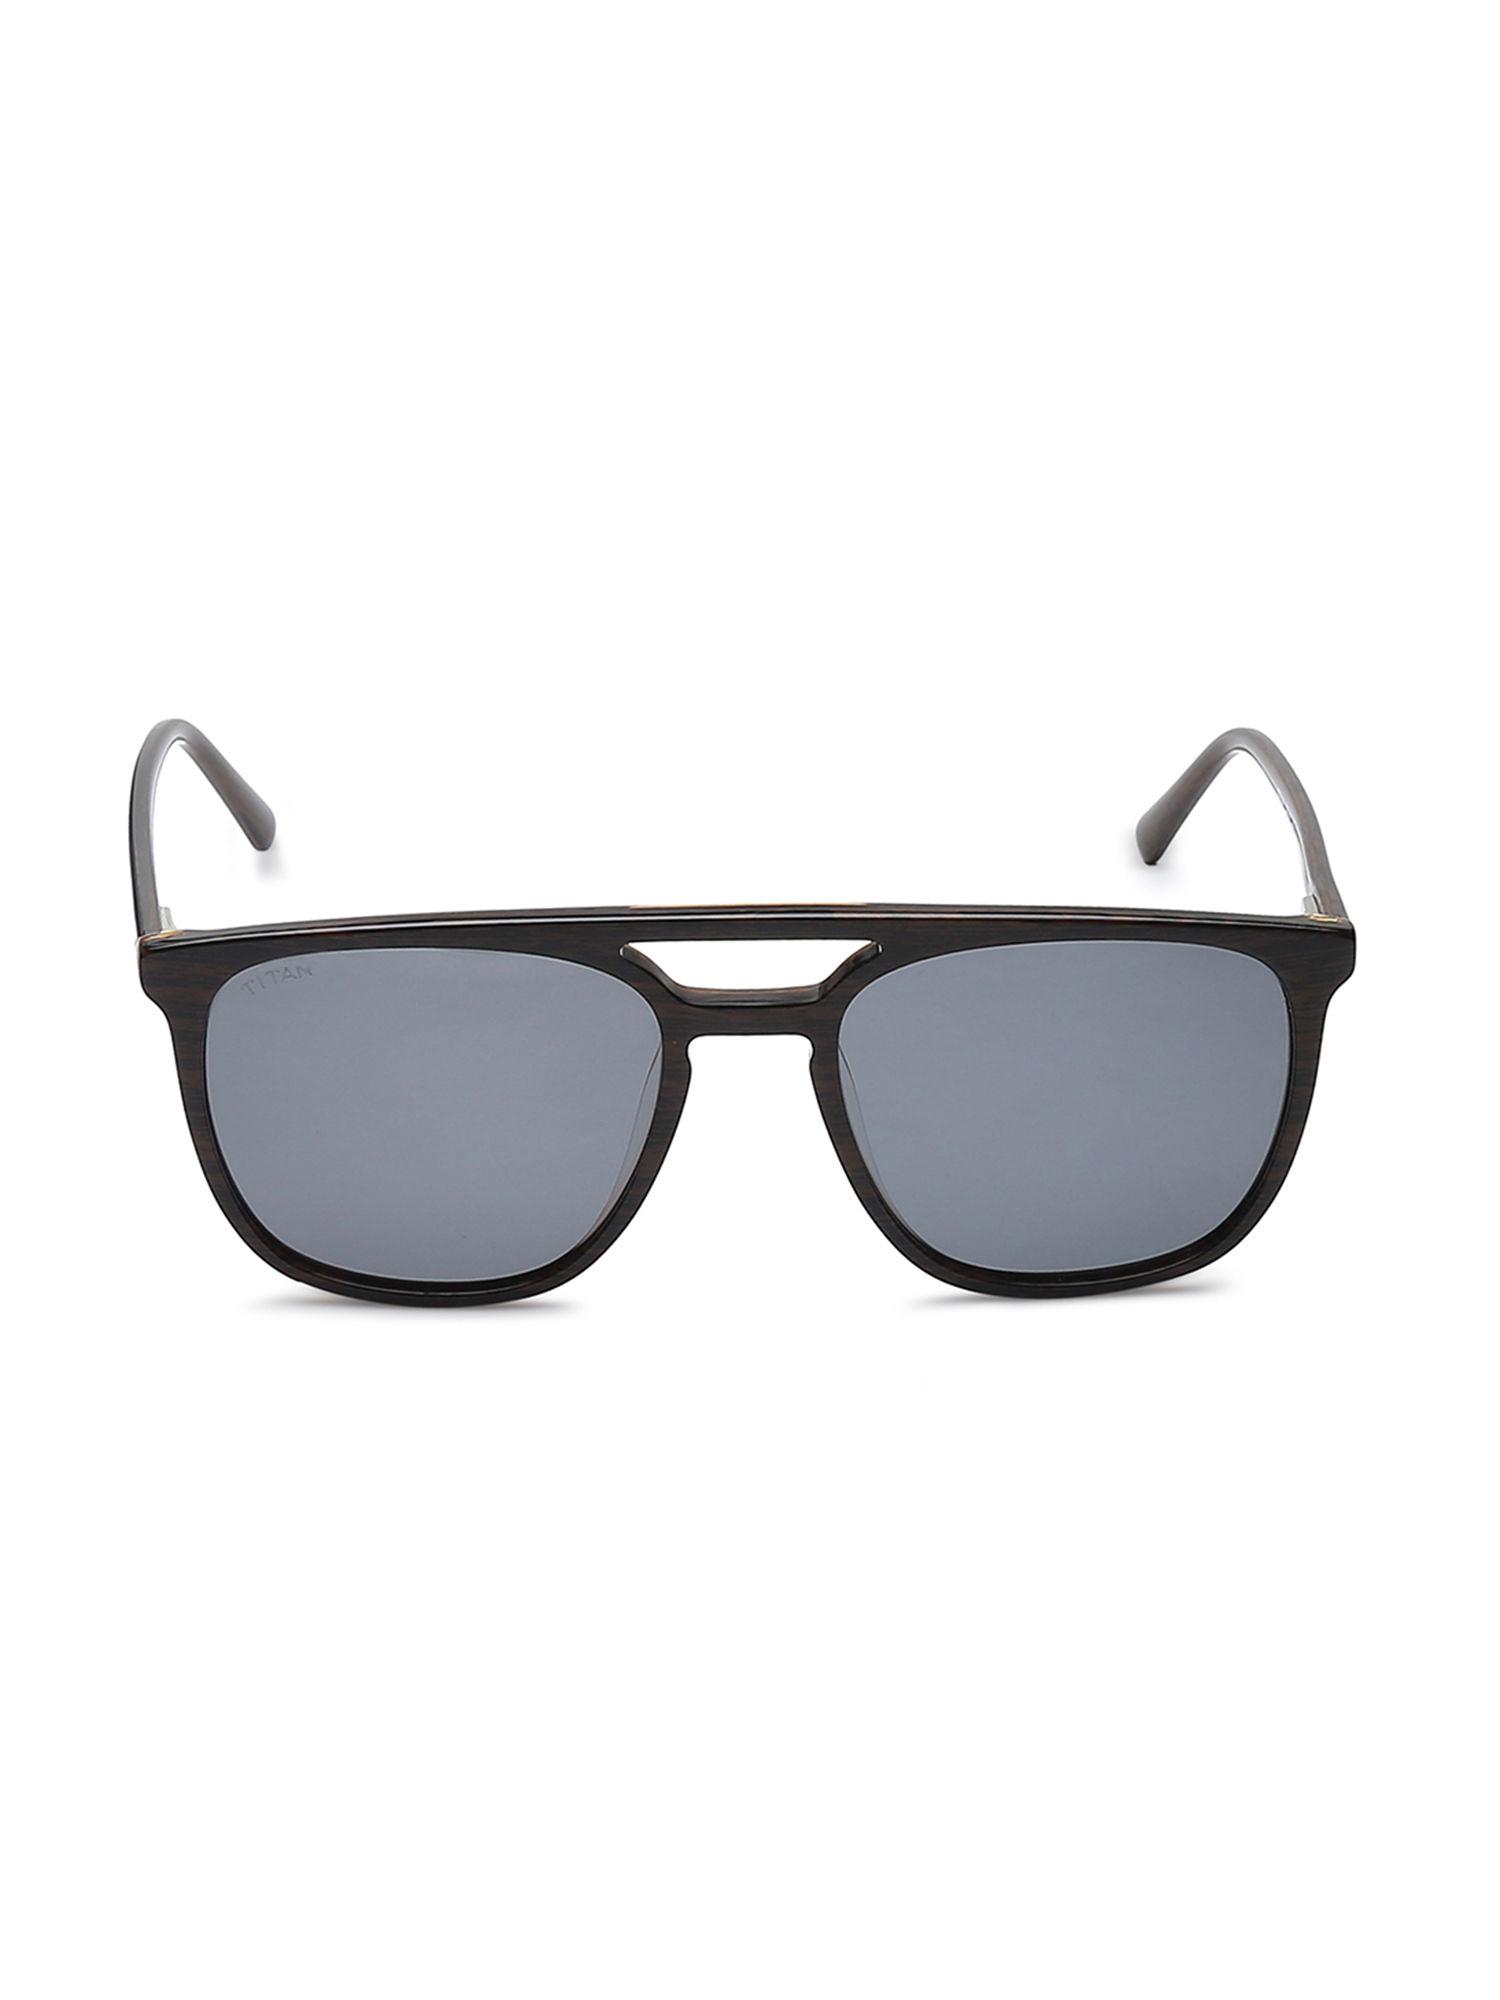 black clubmaster sunglasses (gp356bk1pv)